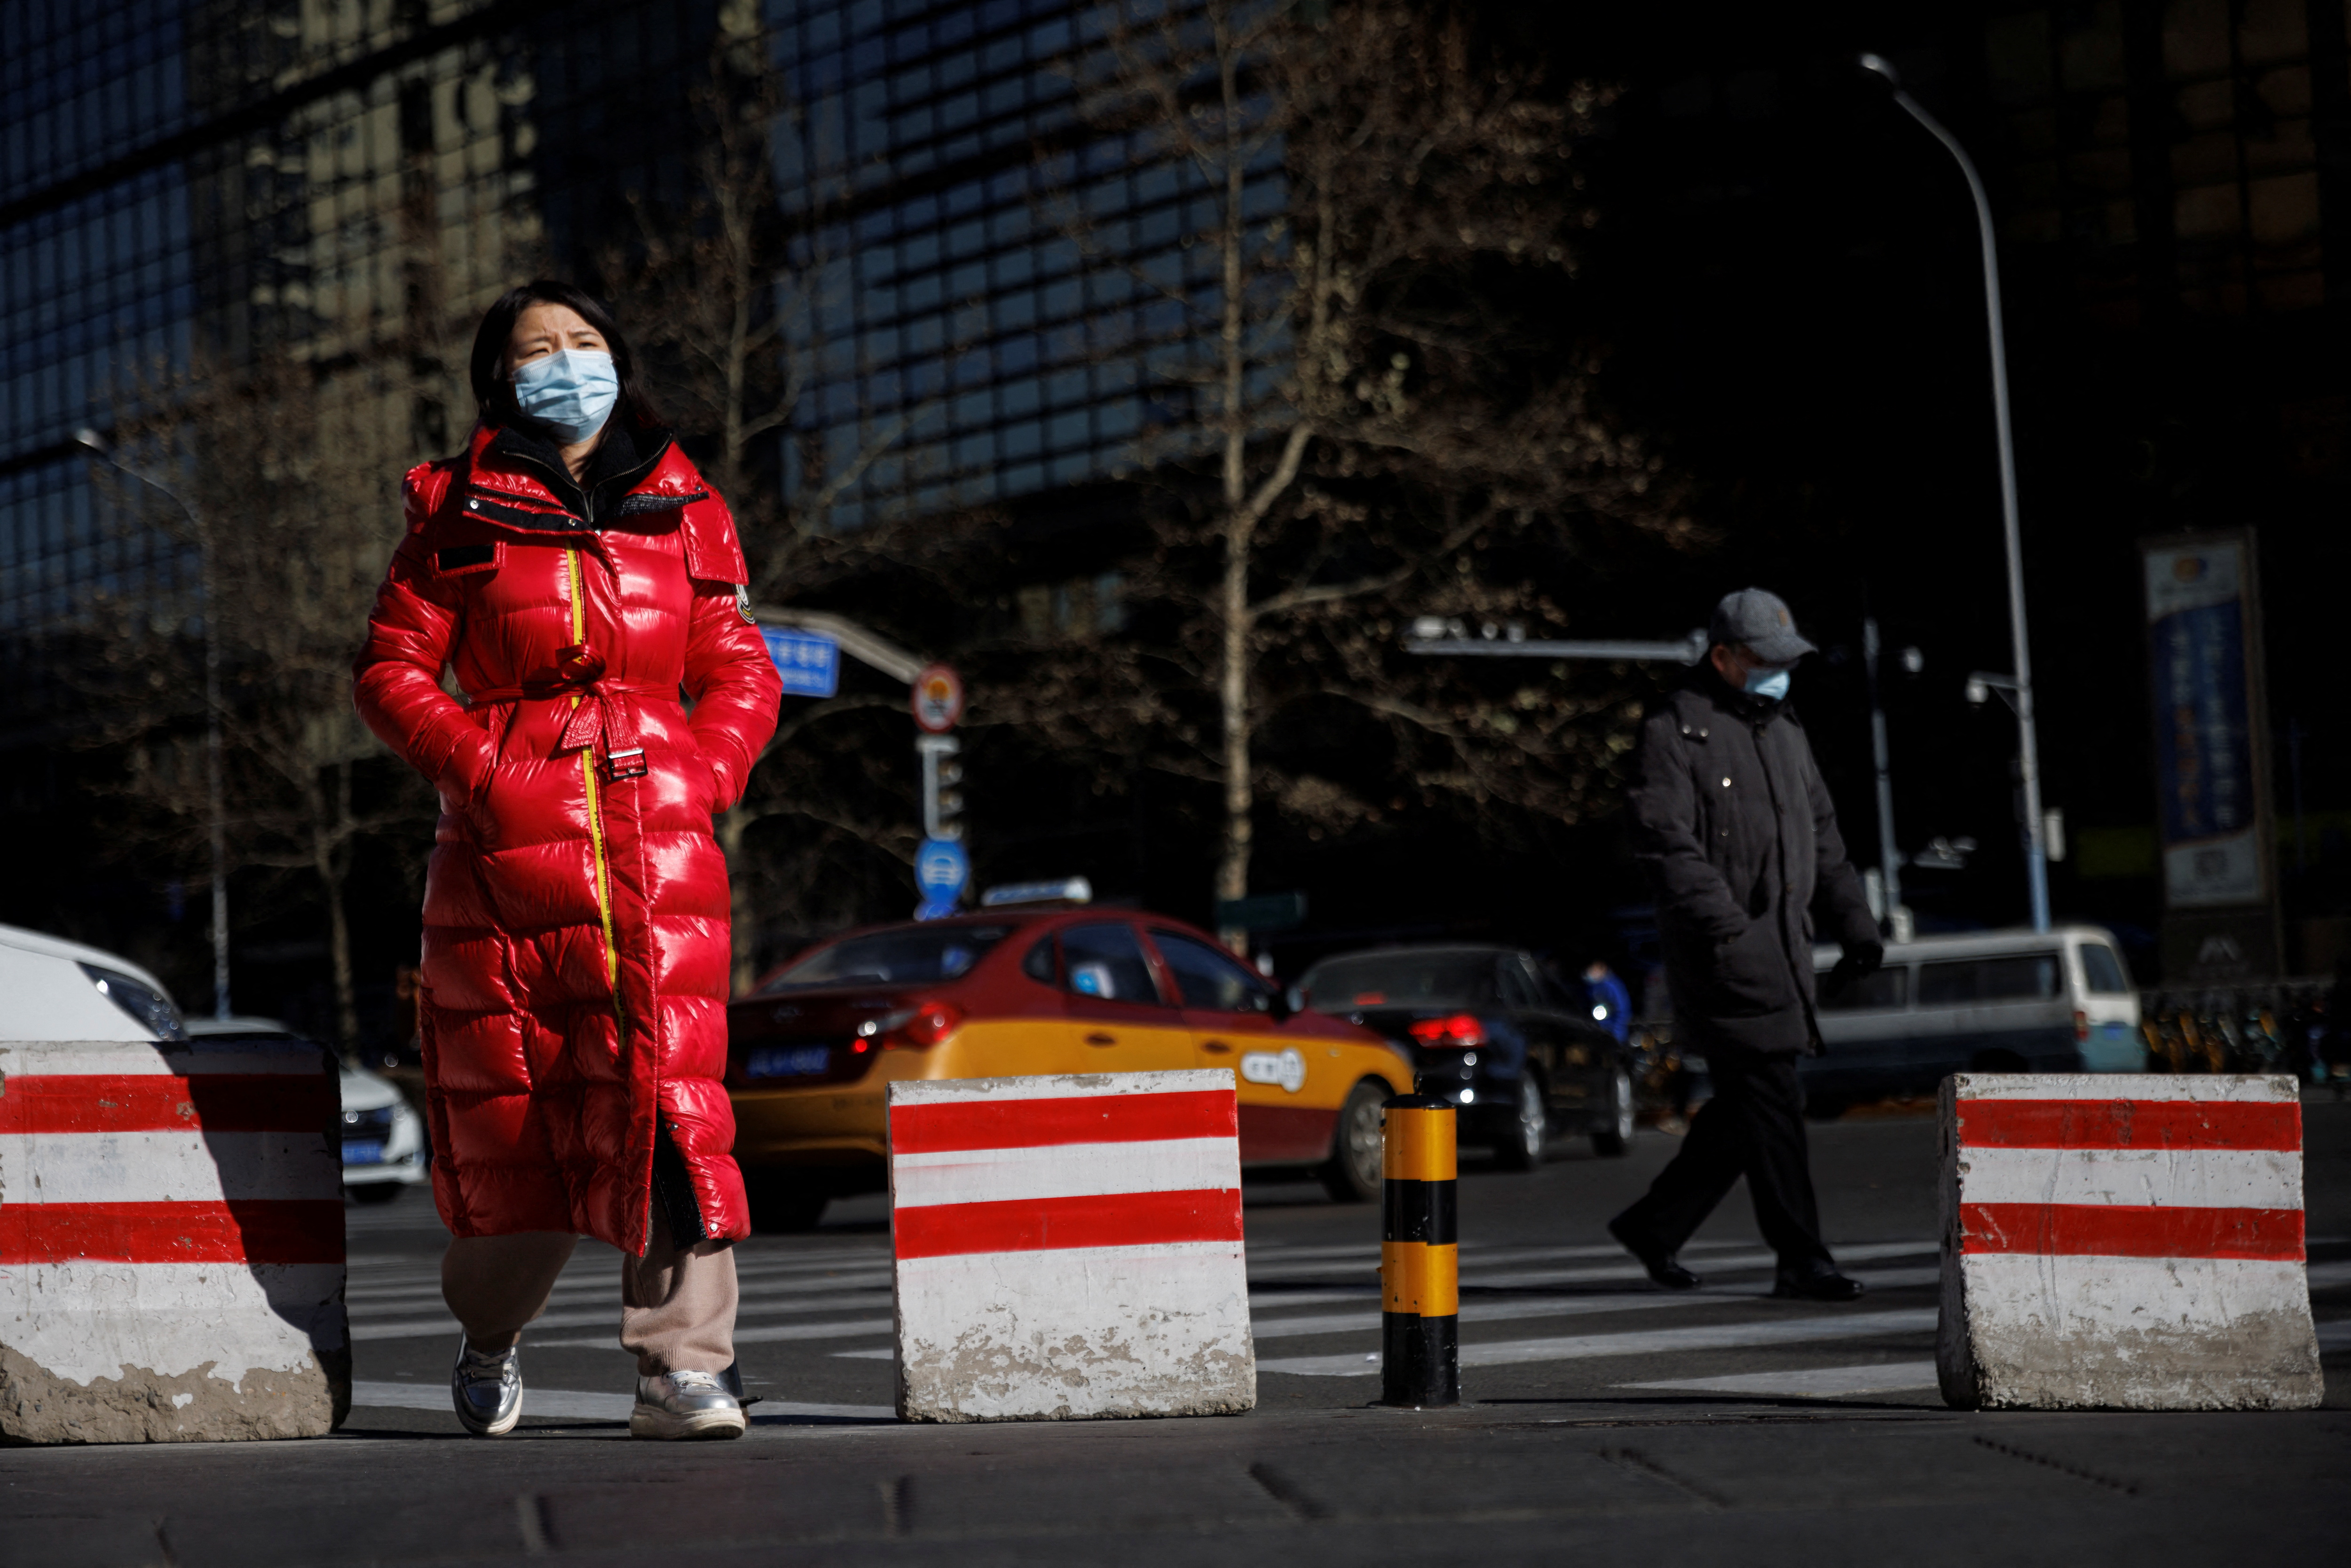 People walk on a street as the coronavirus disease (COVID-19) outbreak continues in Beijing